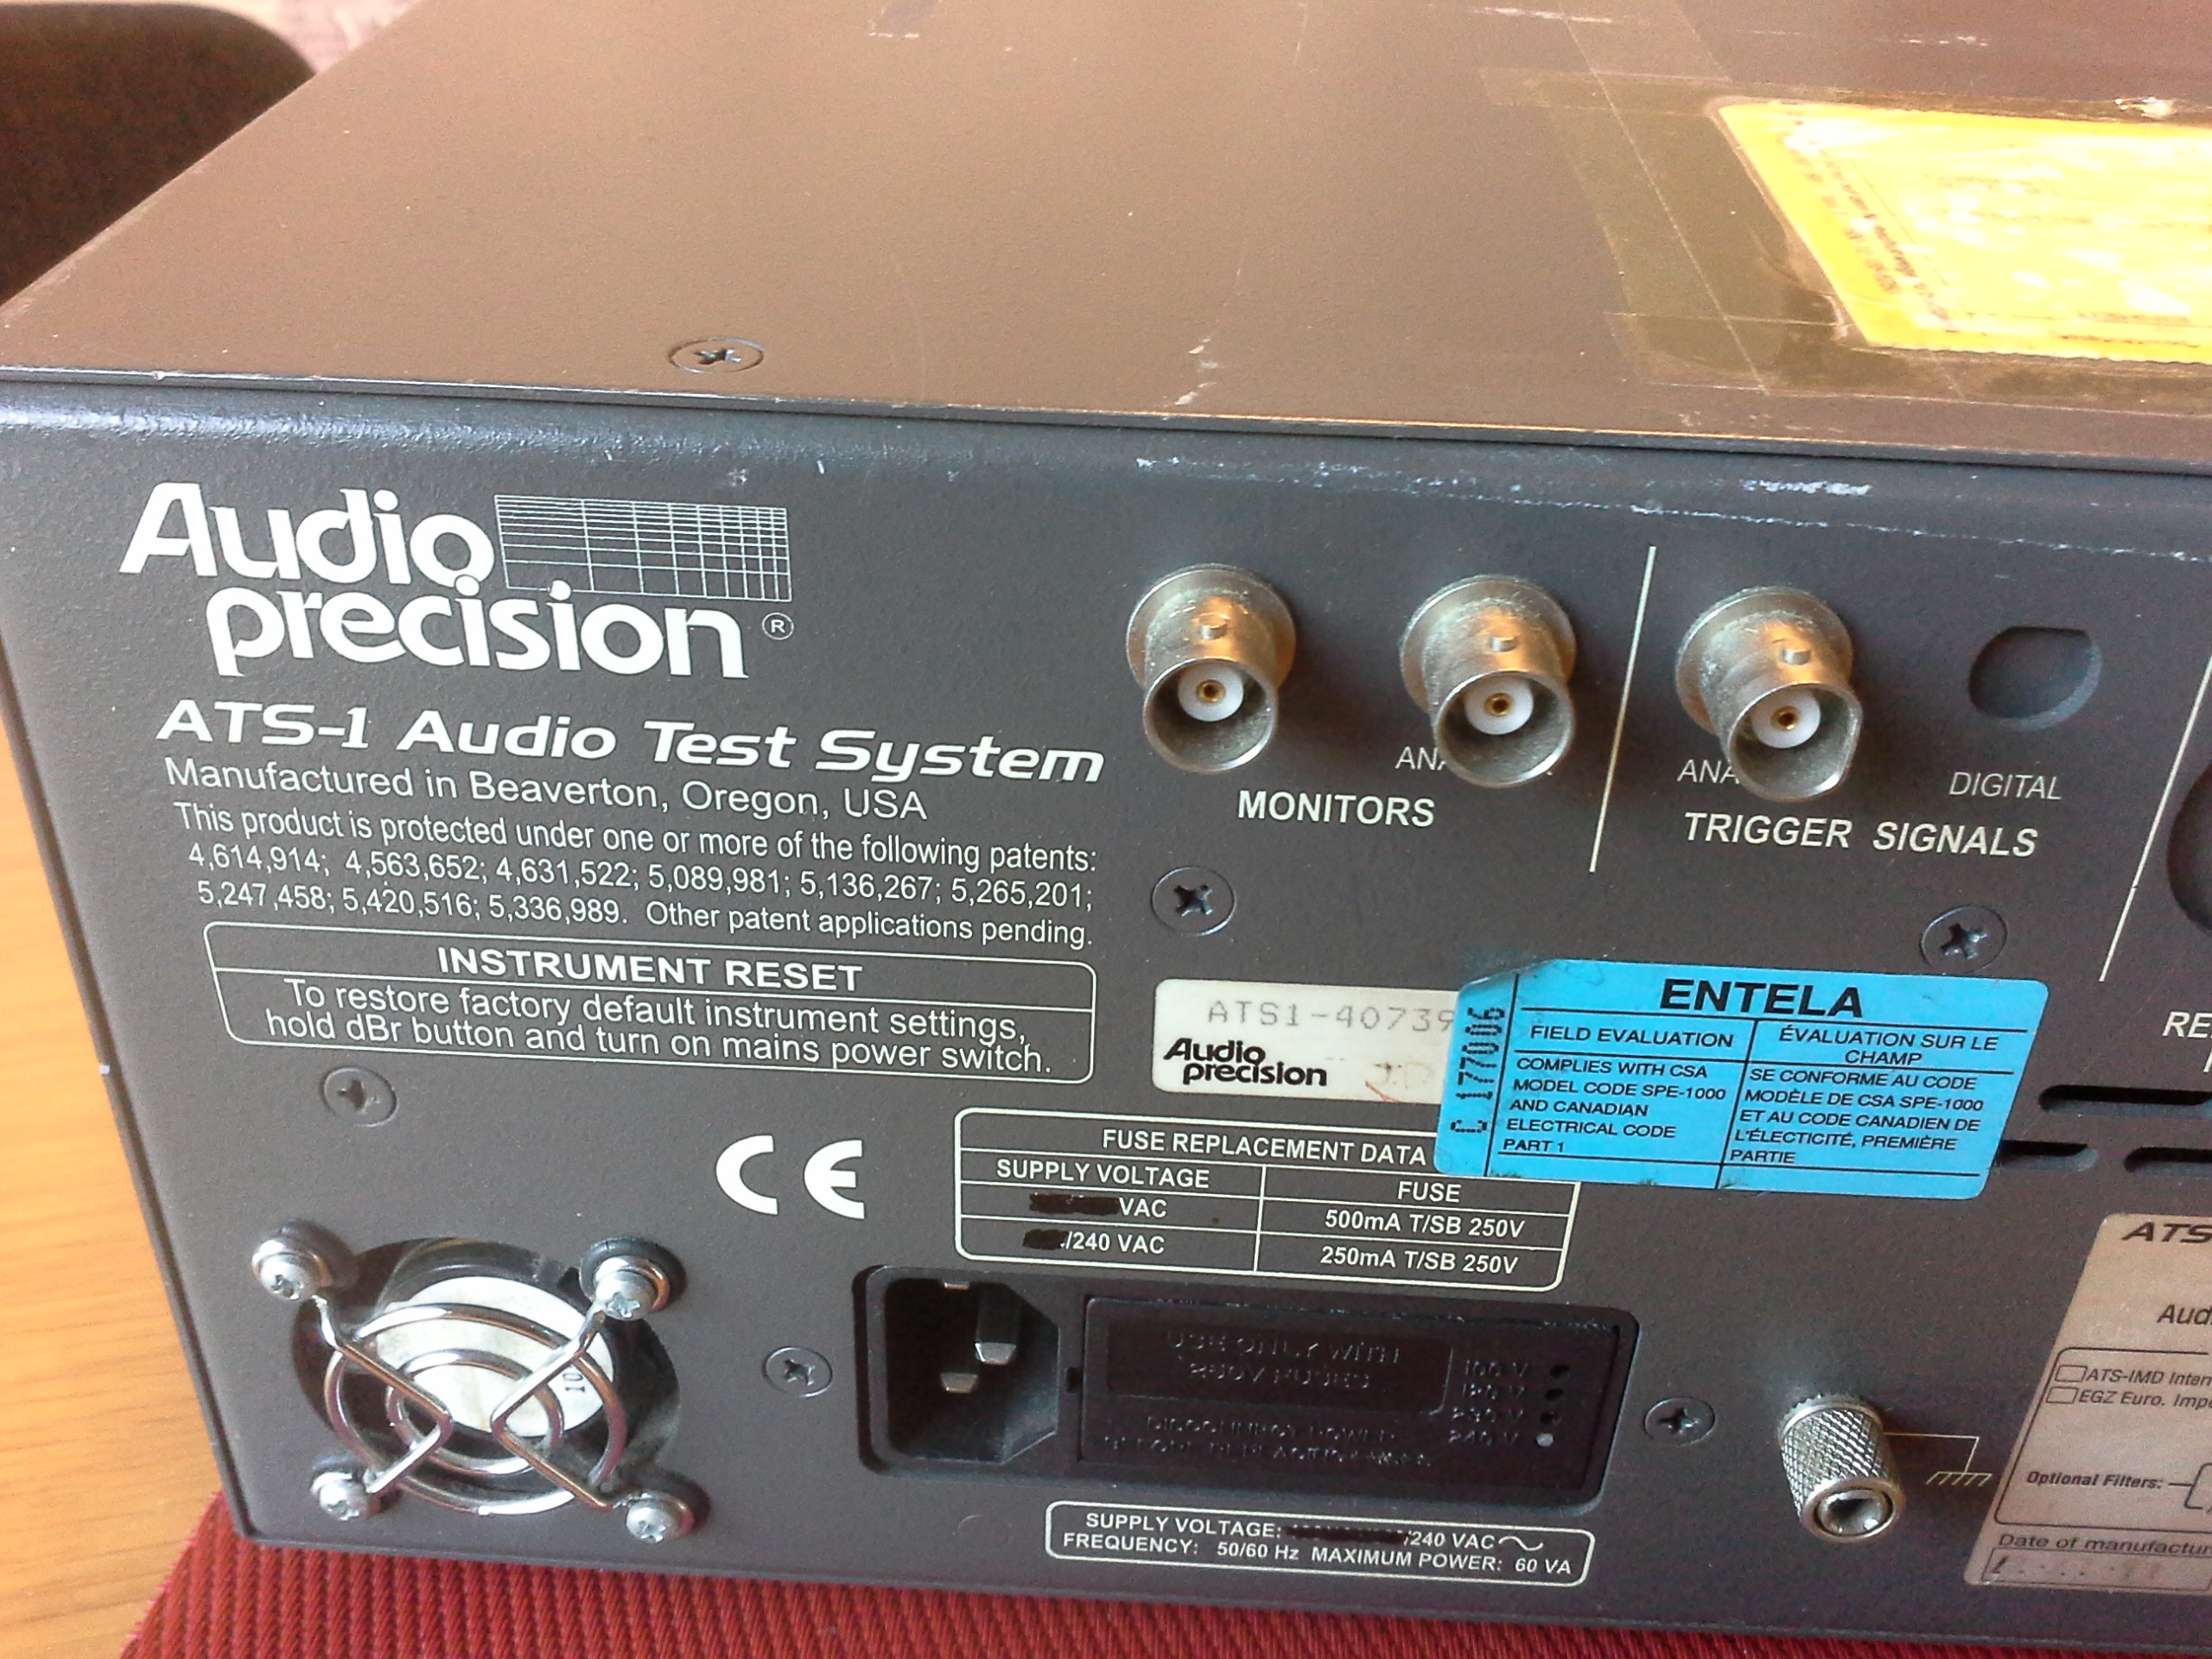 Audio Precision, ATS-1 Audio Test System, Flugzeug